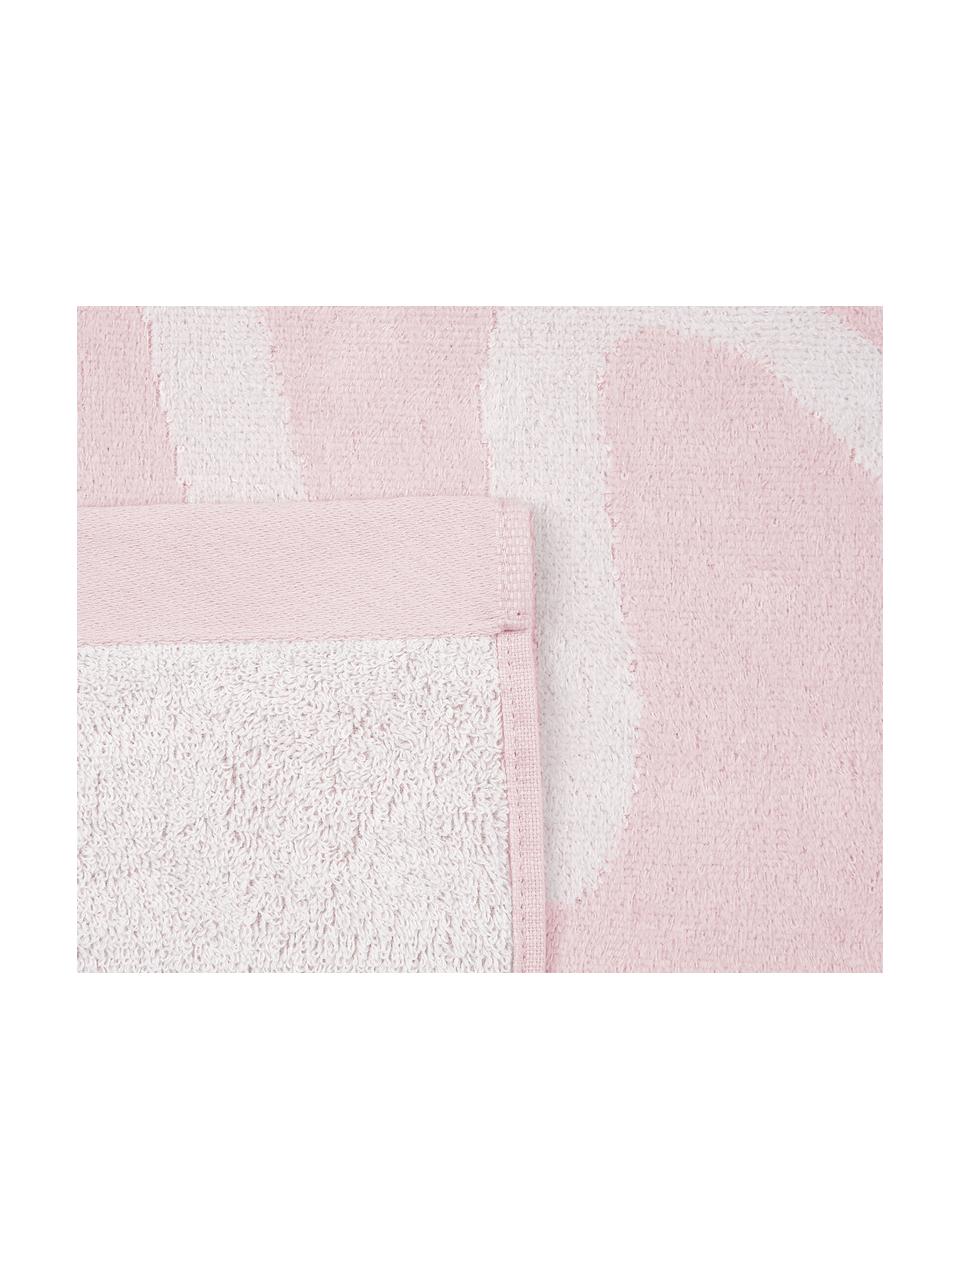 Strandlaken Sun, 100% katoen,
Lichte kwaliteit 420 g/m², Roze, wit, 100 x 170 cm